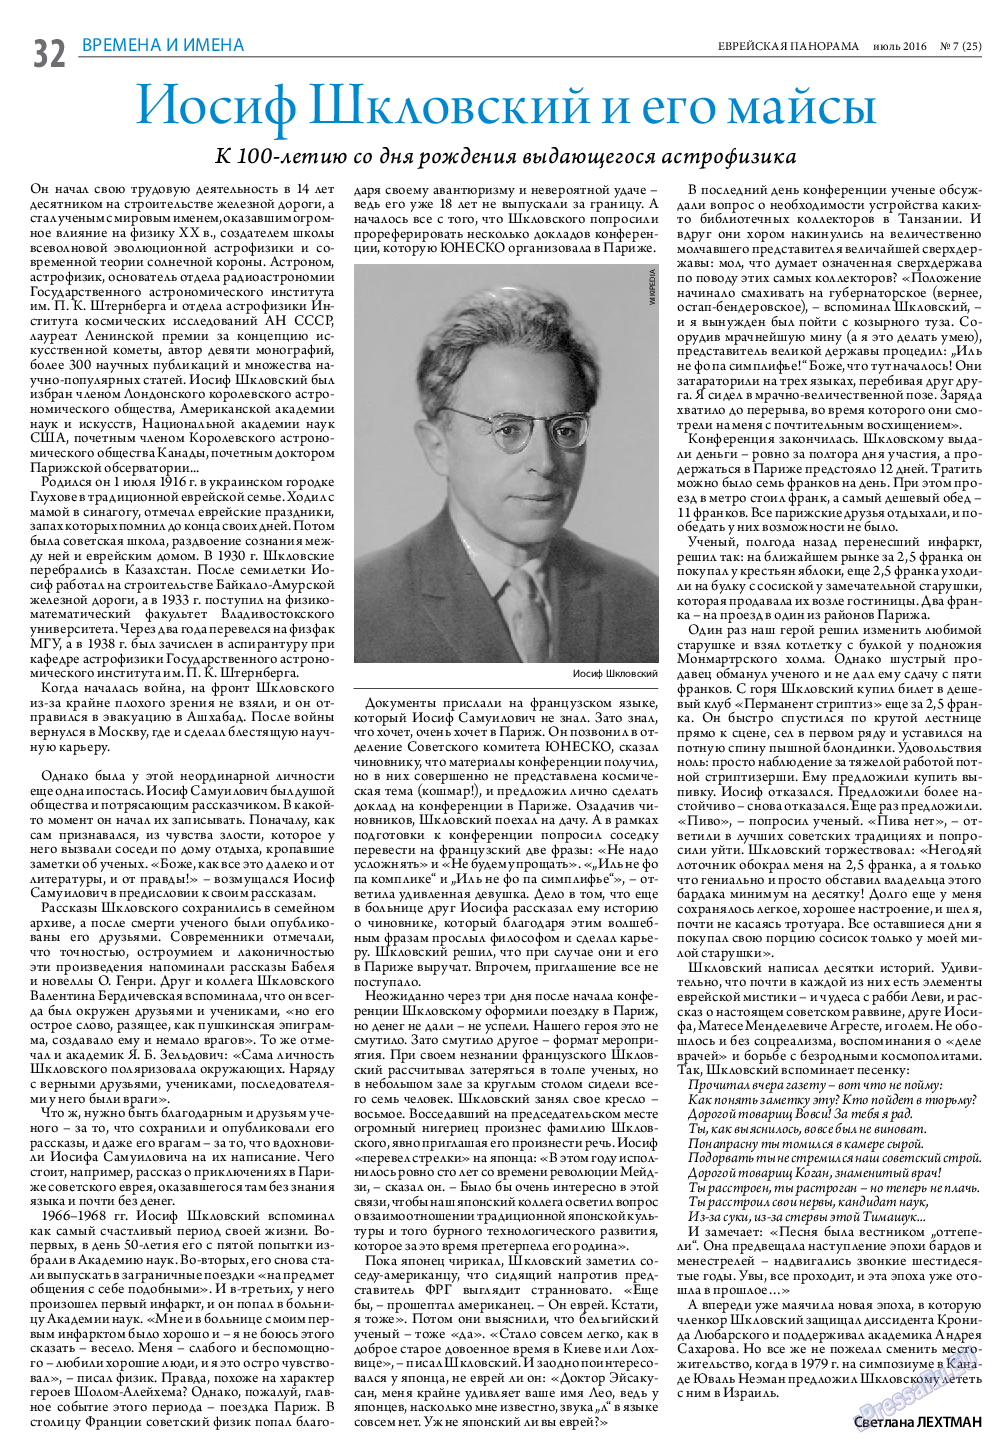 Еврейская панорама, газета. 2016 №7 стр.32